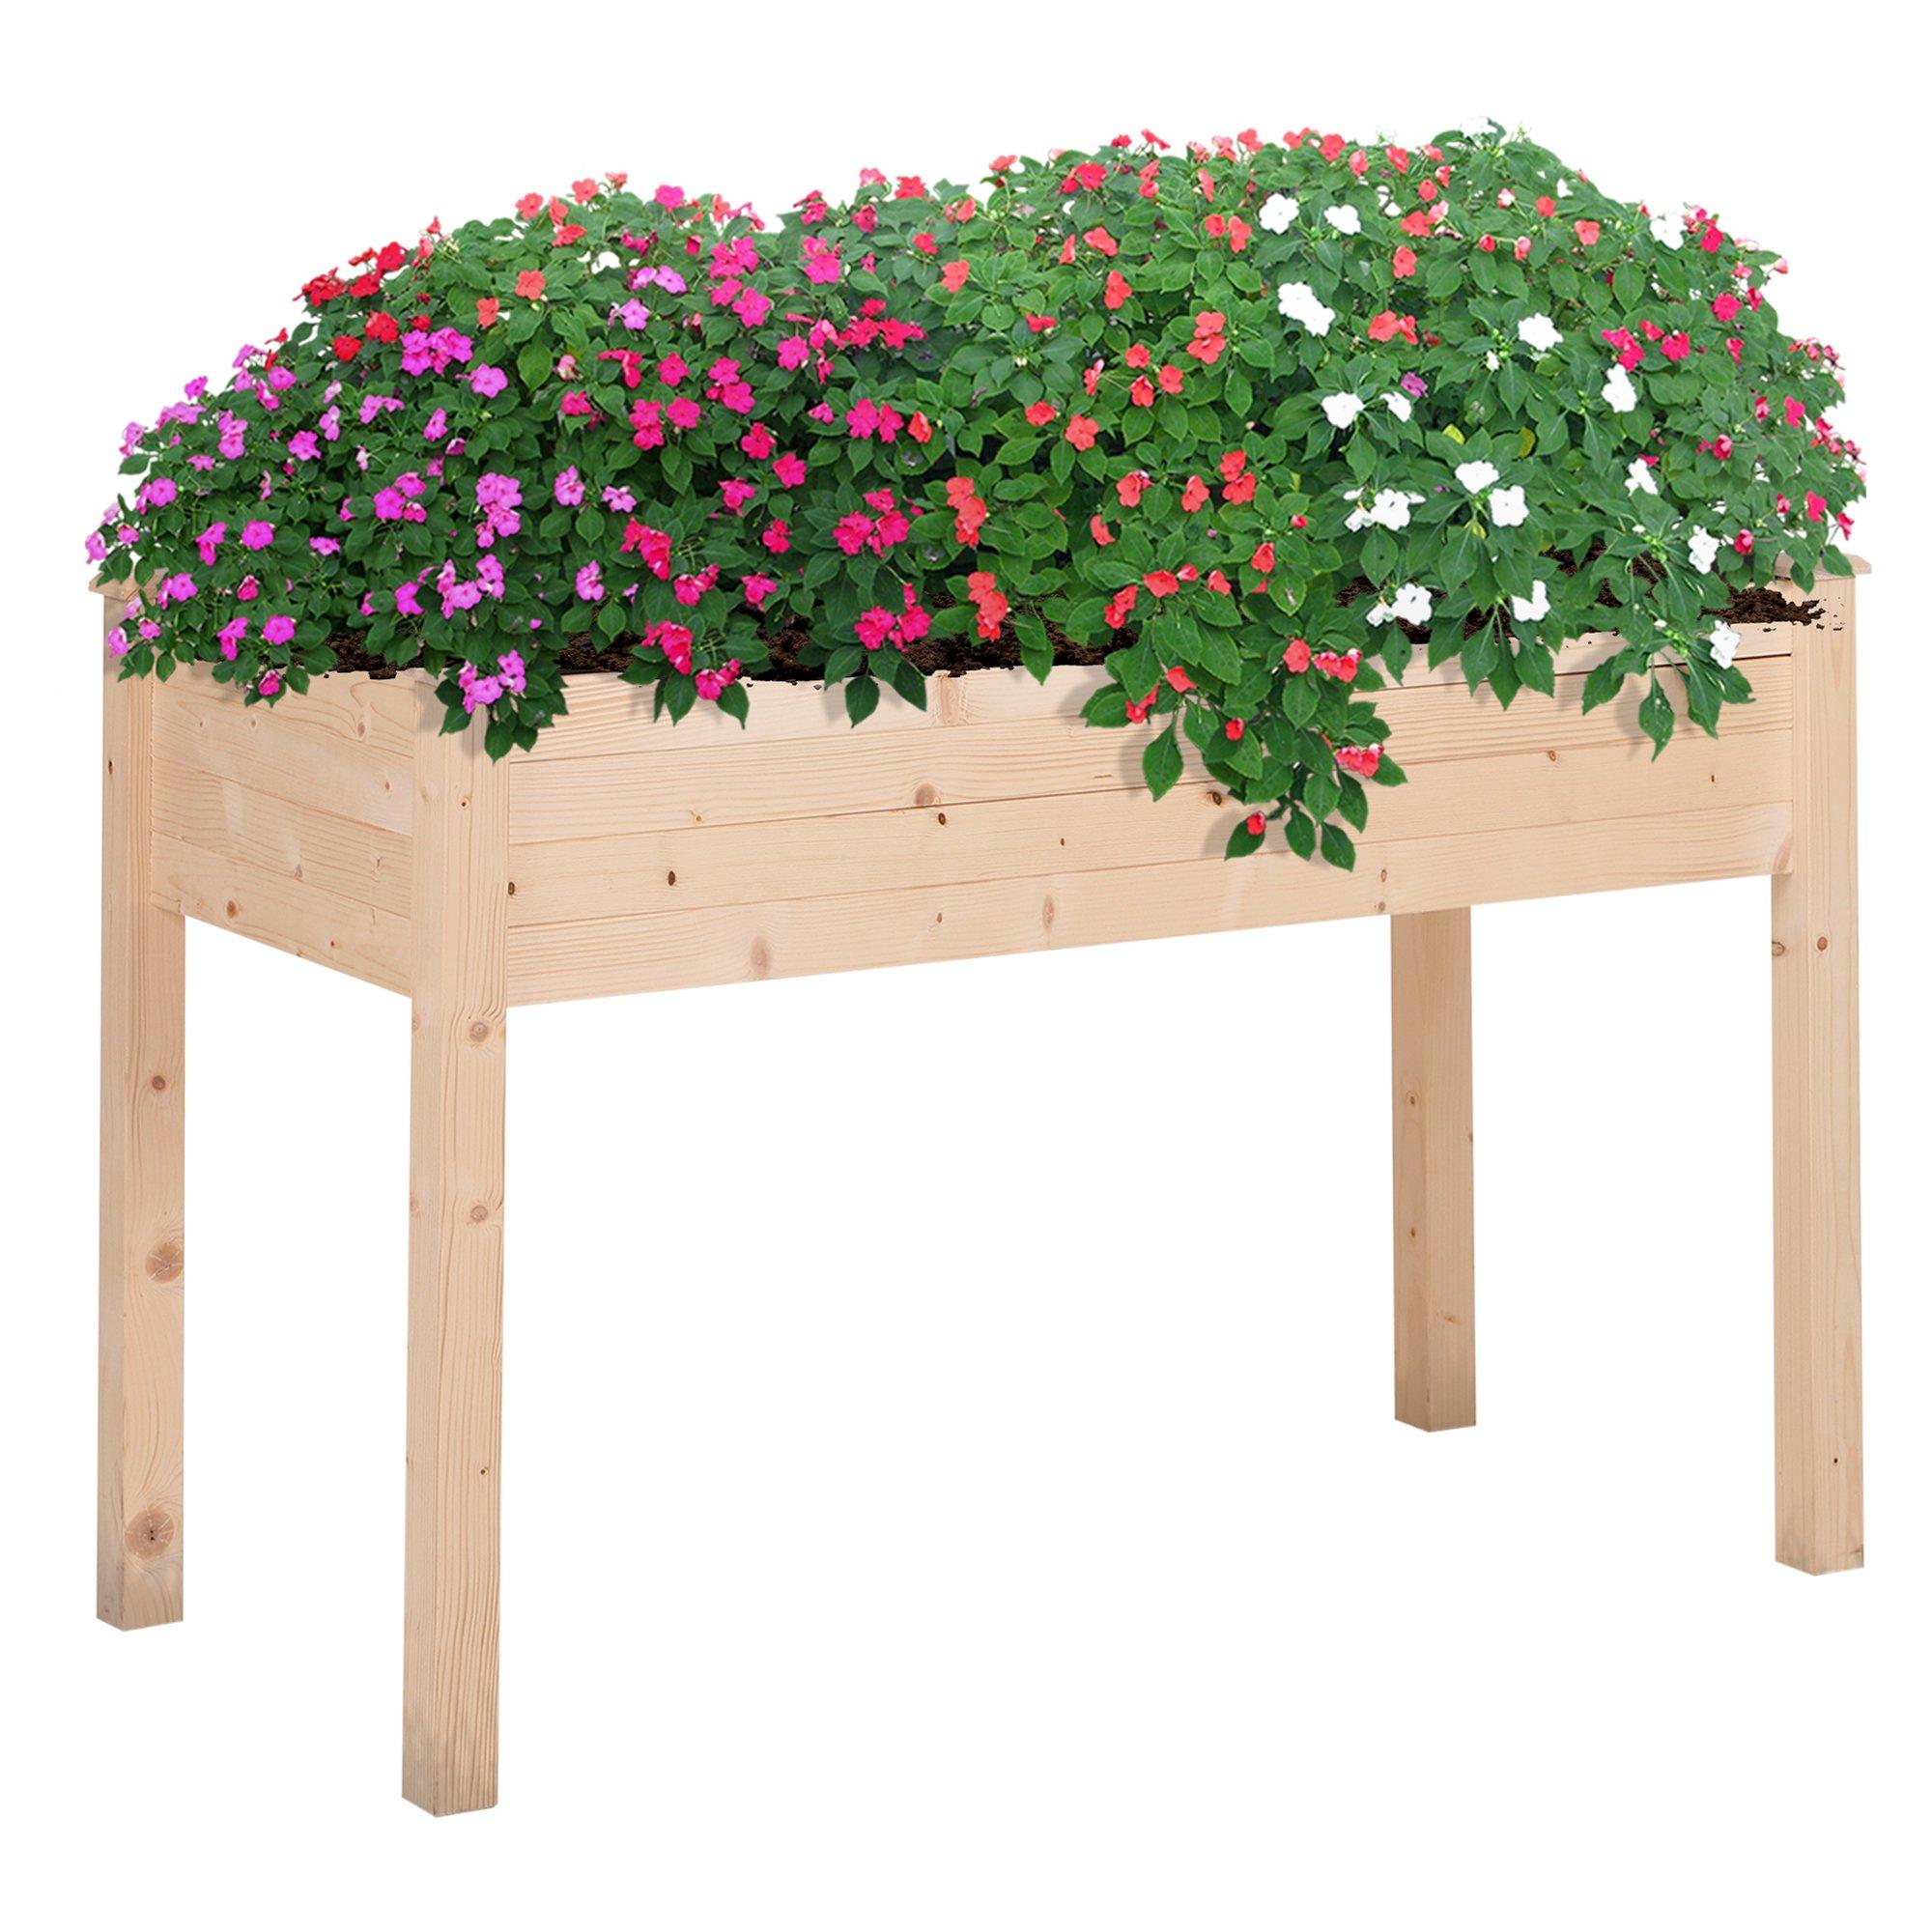 Garden Wooden Planter Flower Raised Bed Herb Grow Box Container